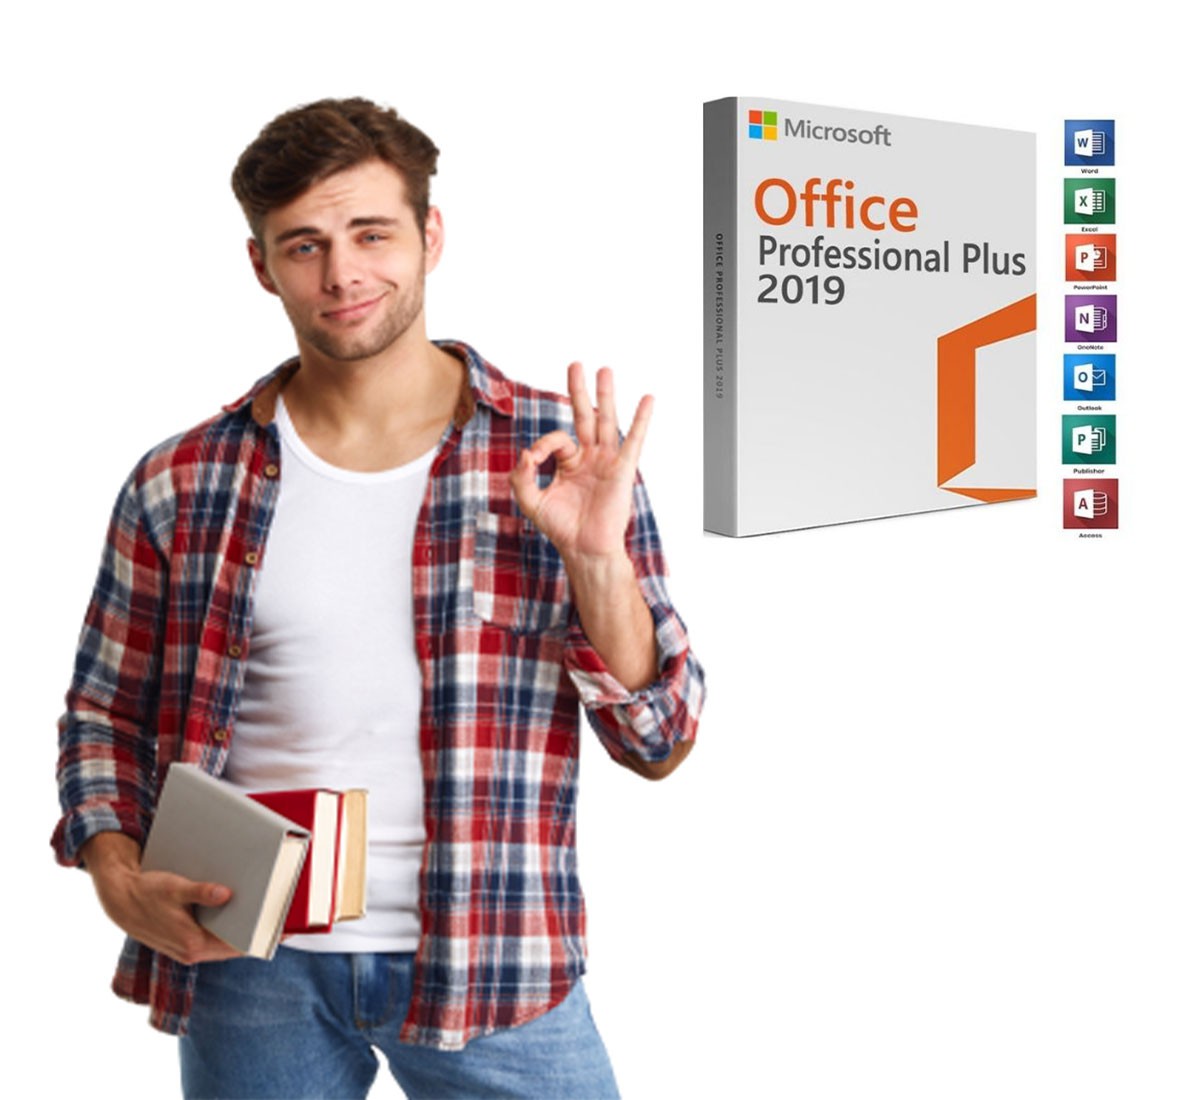 Install Microsoft Office Professional Plus 2019